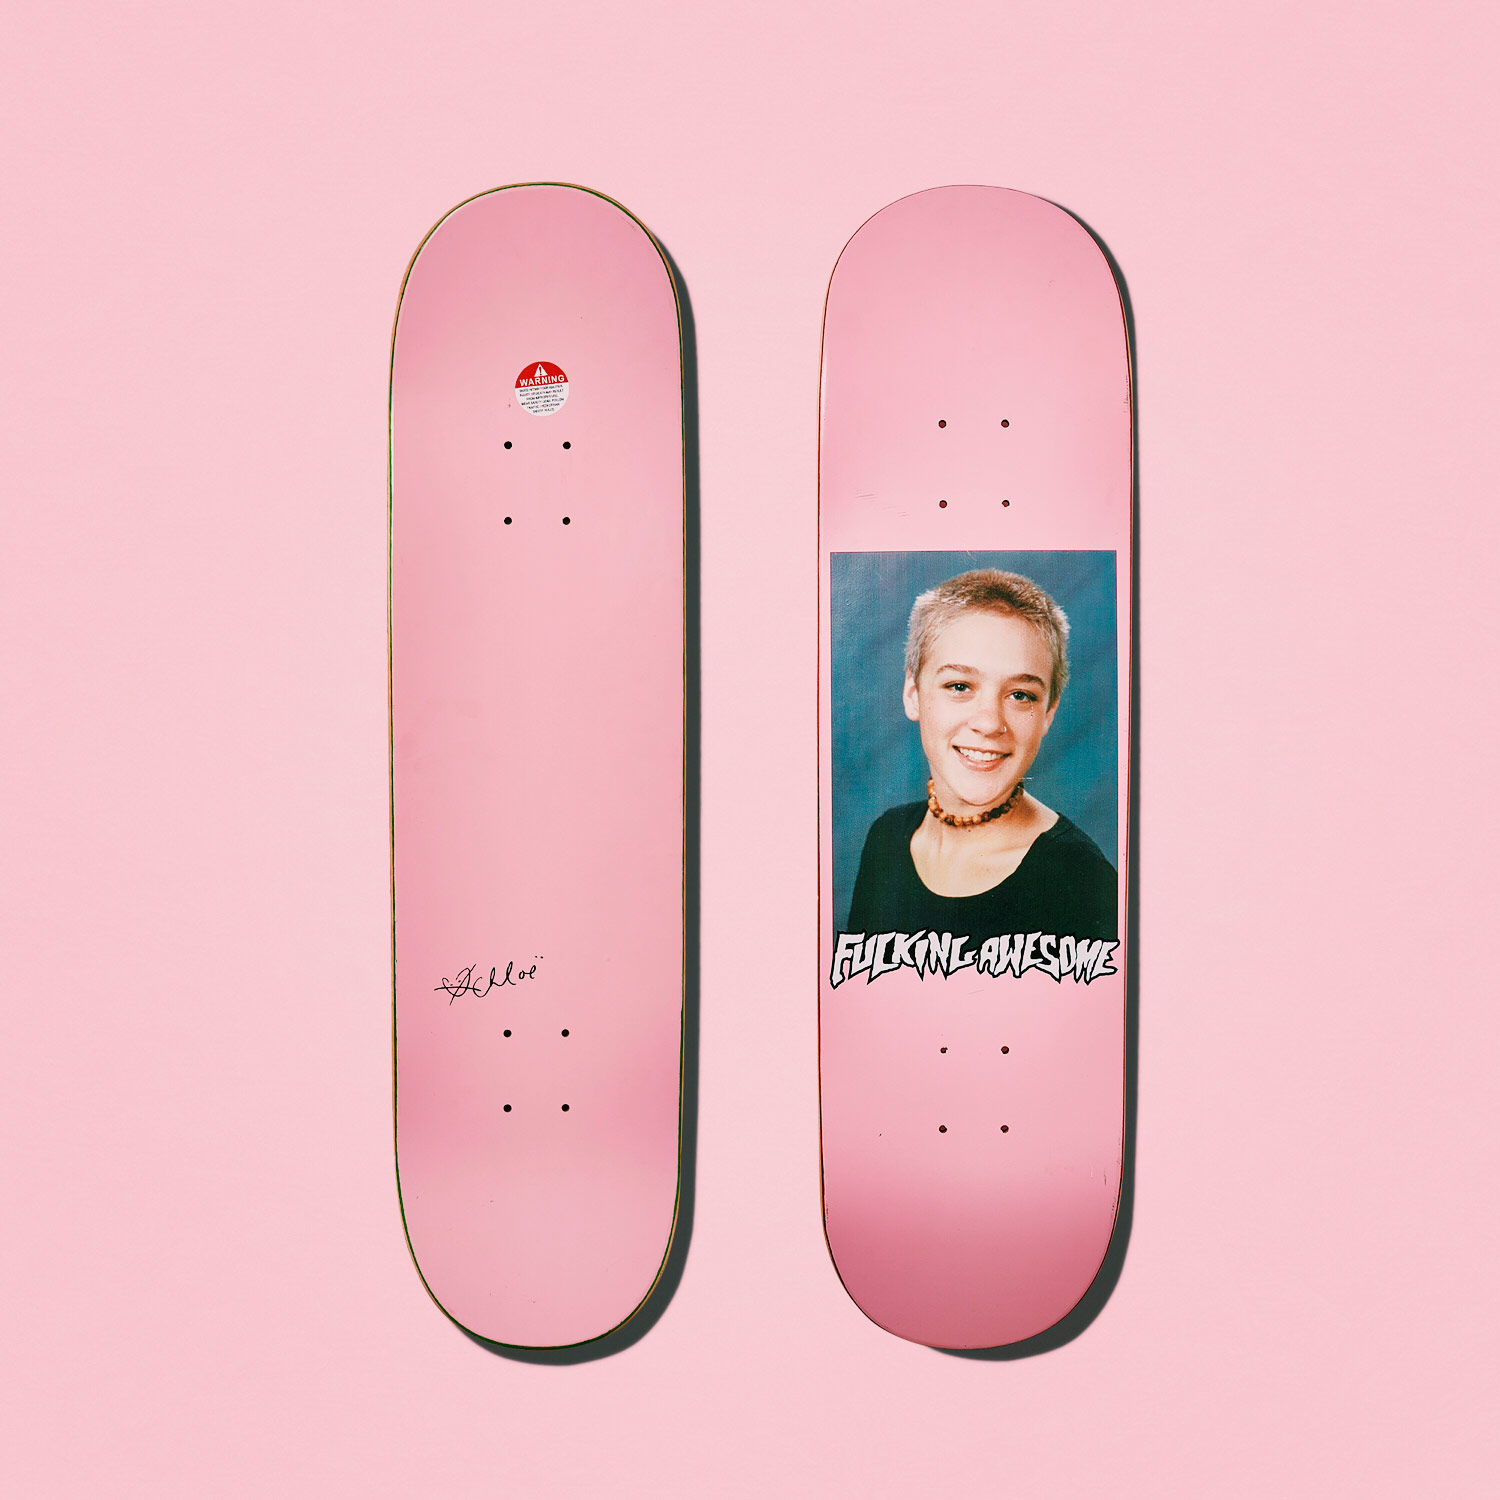 Sydney Reising's pink Chloë Sevigny skateboard.